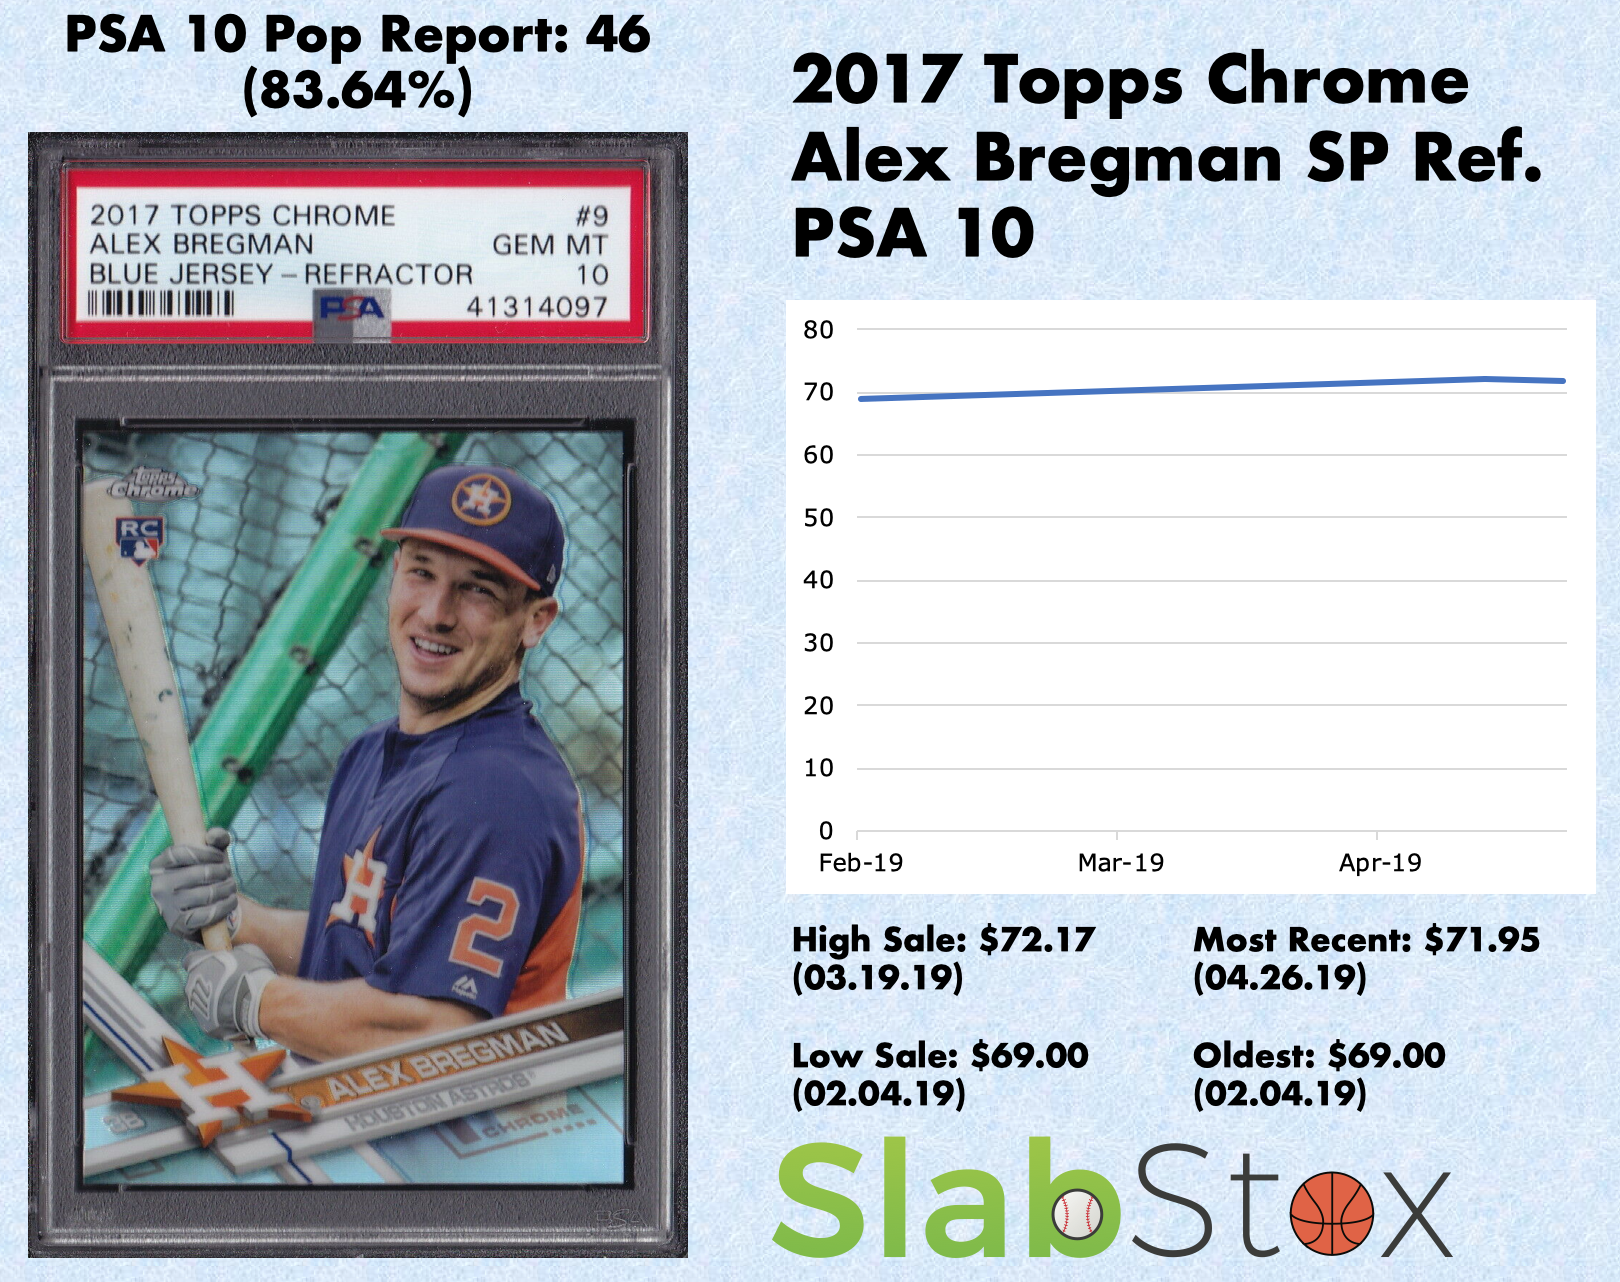 SlabStox infographic for 2017 Topps Chrome Alex Bregman SP Ref. PSA 10 sports trading card